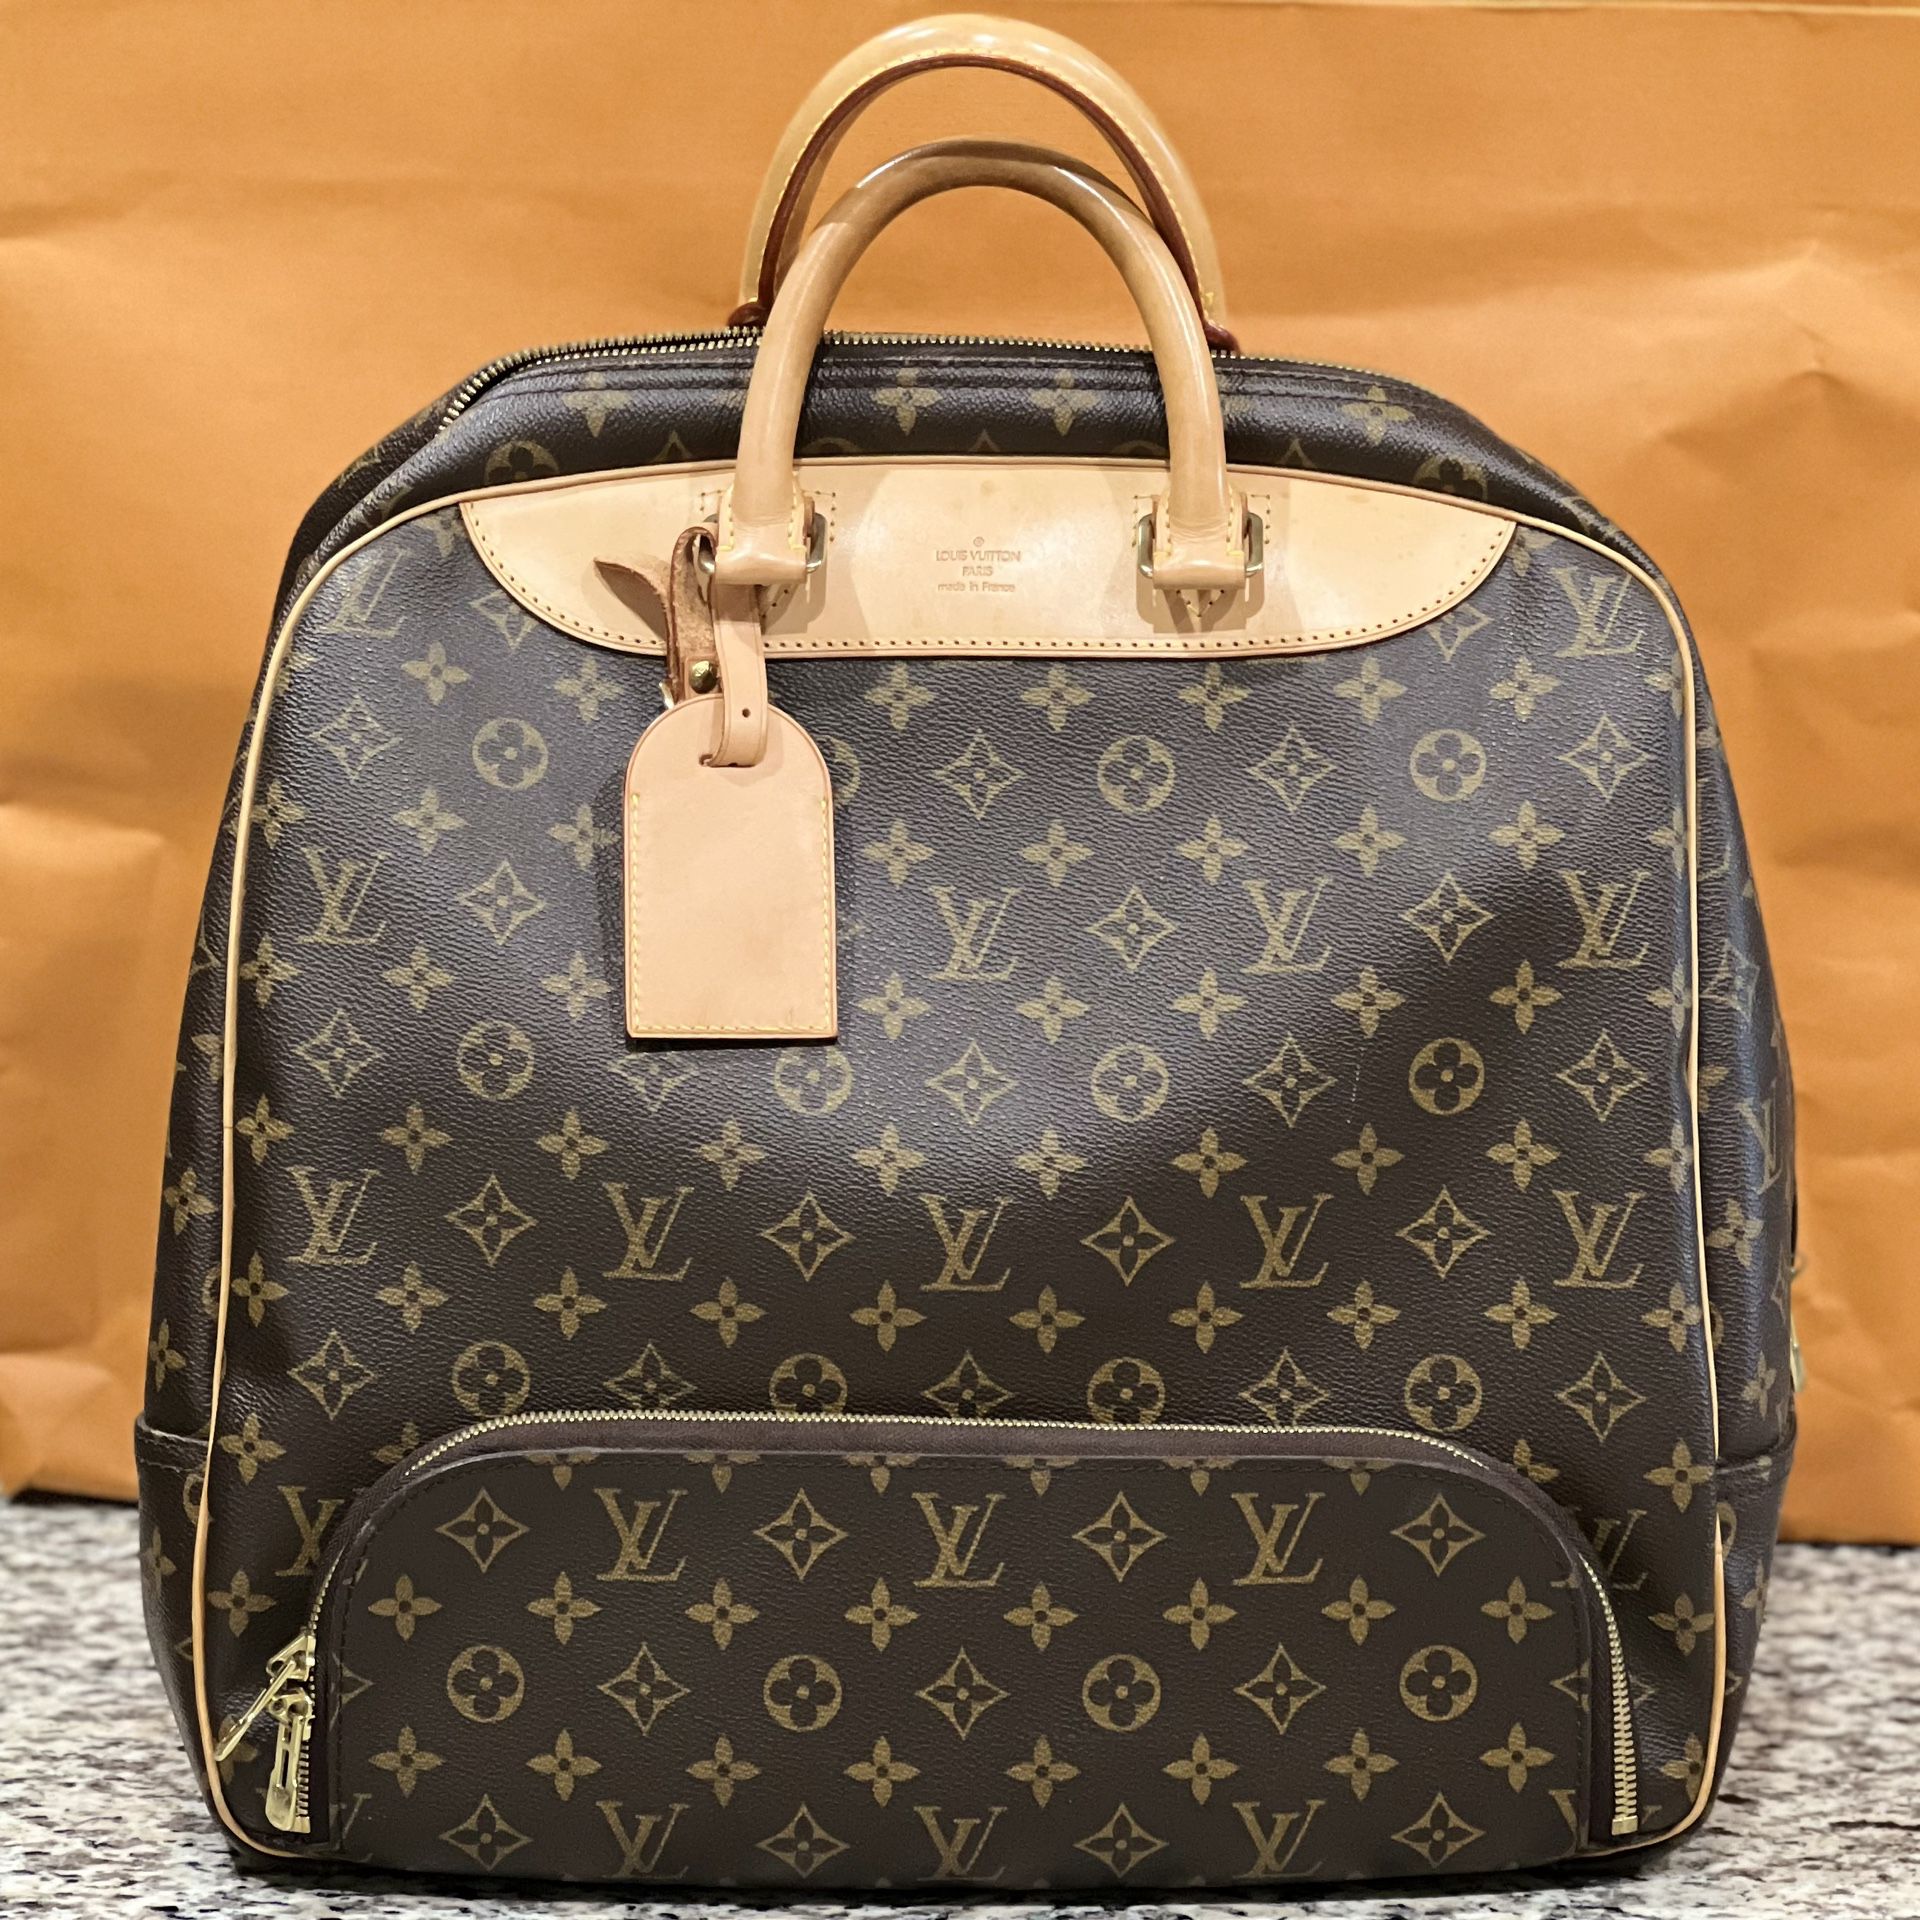 Louis Vuitton Monogram Evasion Travel Bag Luggage for Sale in Peoria, AZ -  OfferUp